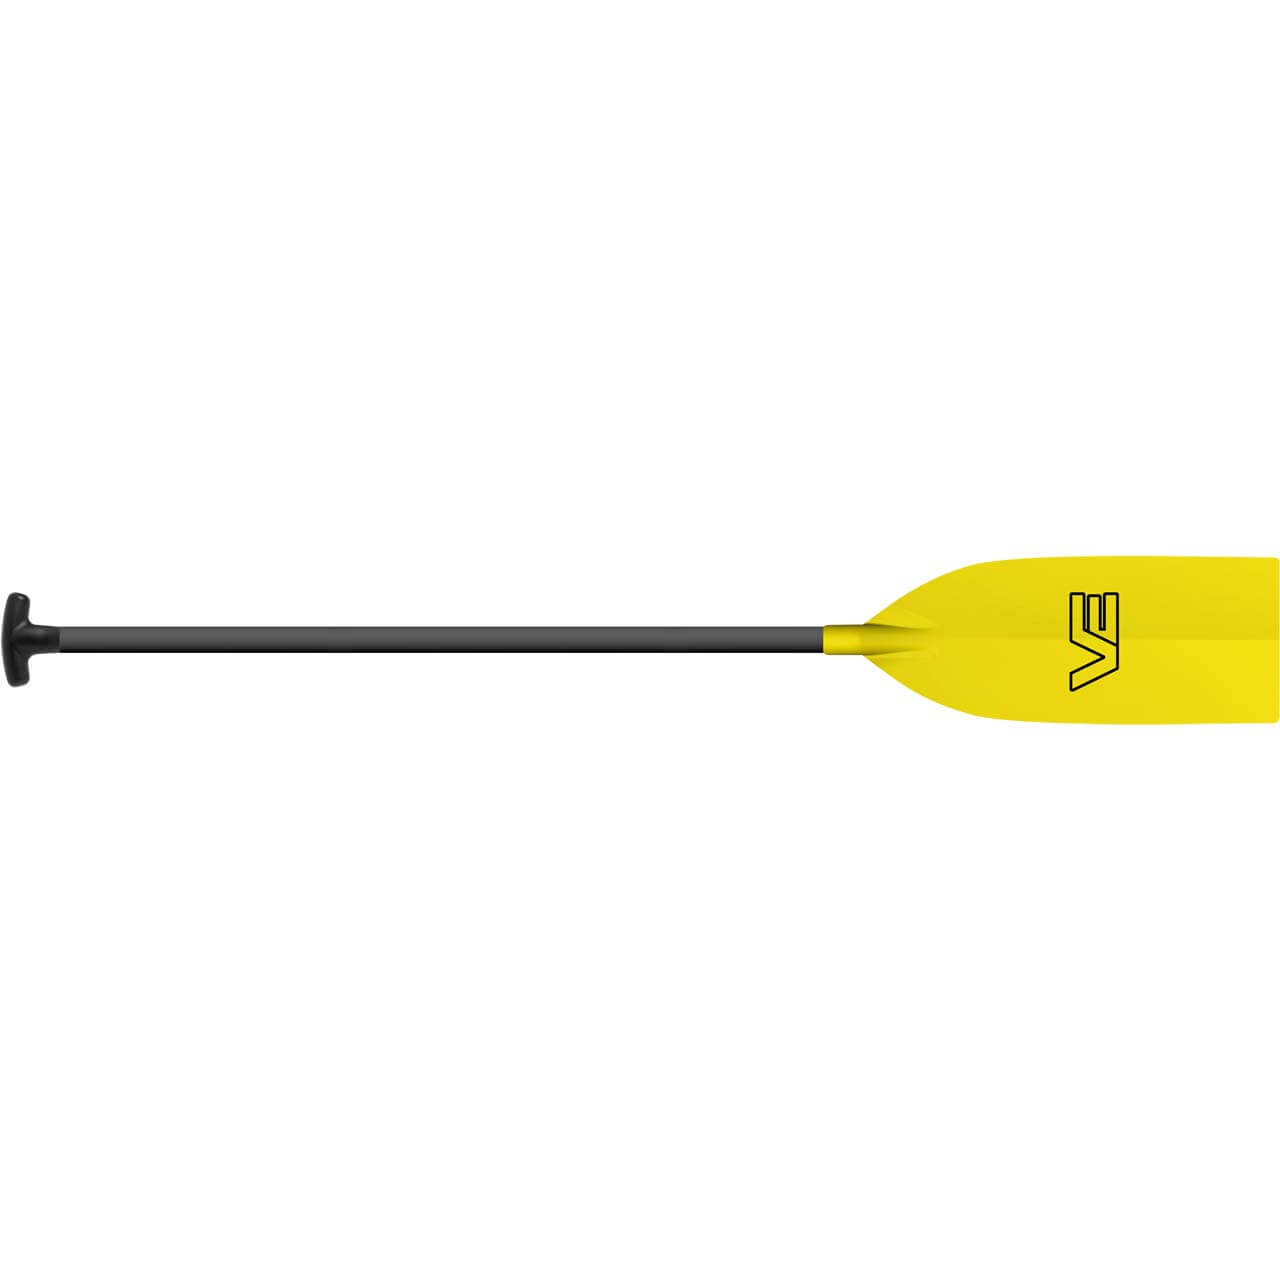 VE Stechpaddel Pro 1pc - Yellow, Uncut von VE Paddles}